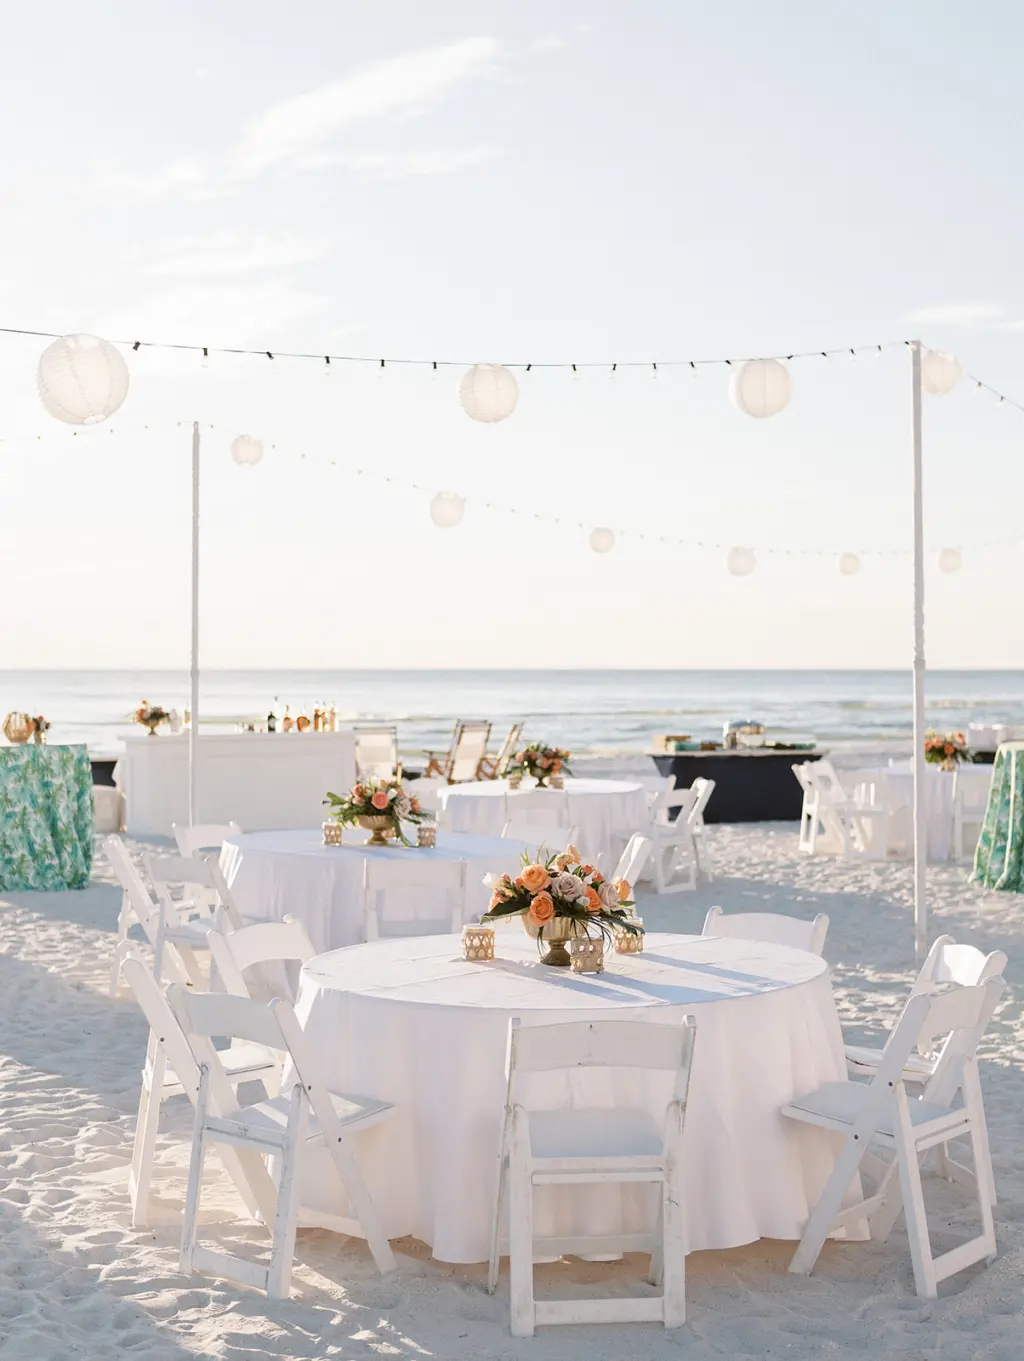 Outdoor Sarasota Destination Wedding Venue Longboat Key Club - Justin DeMutis Photography